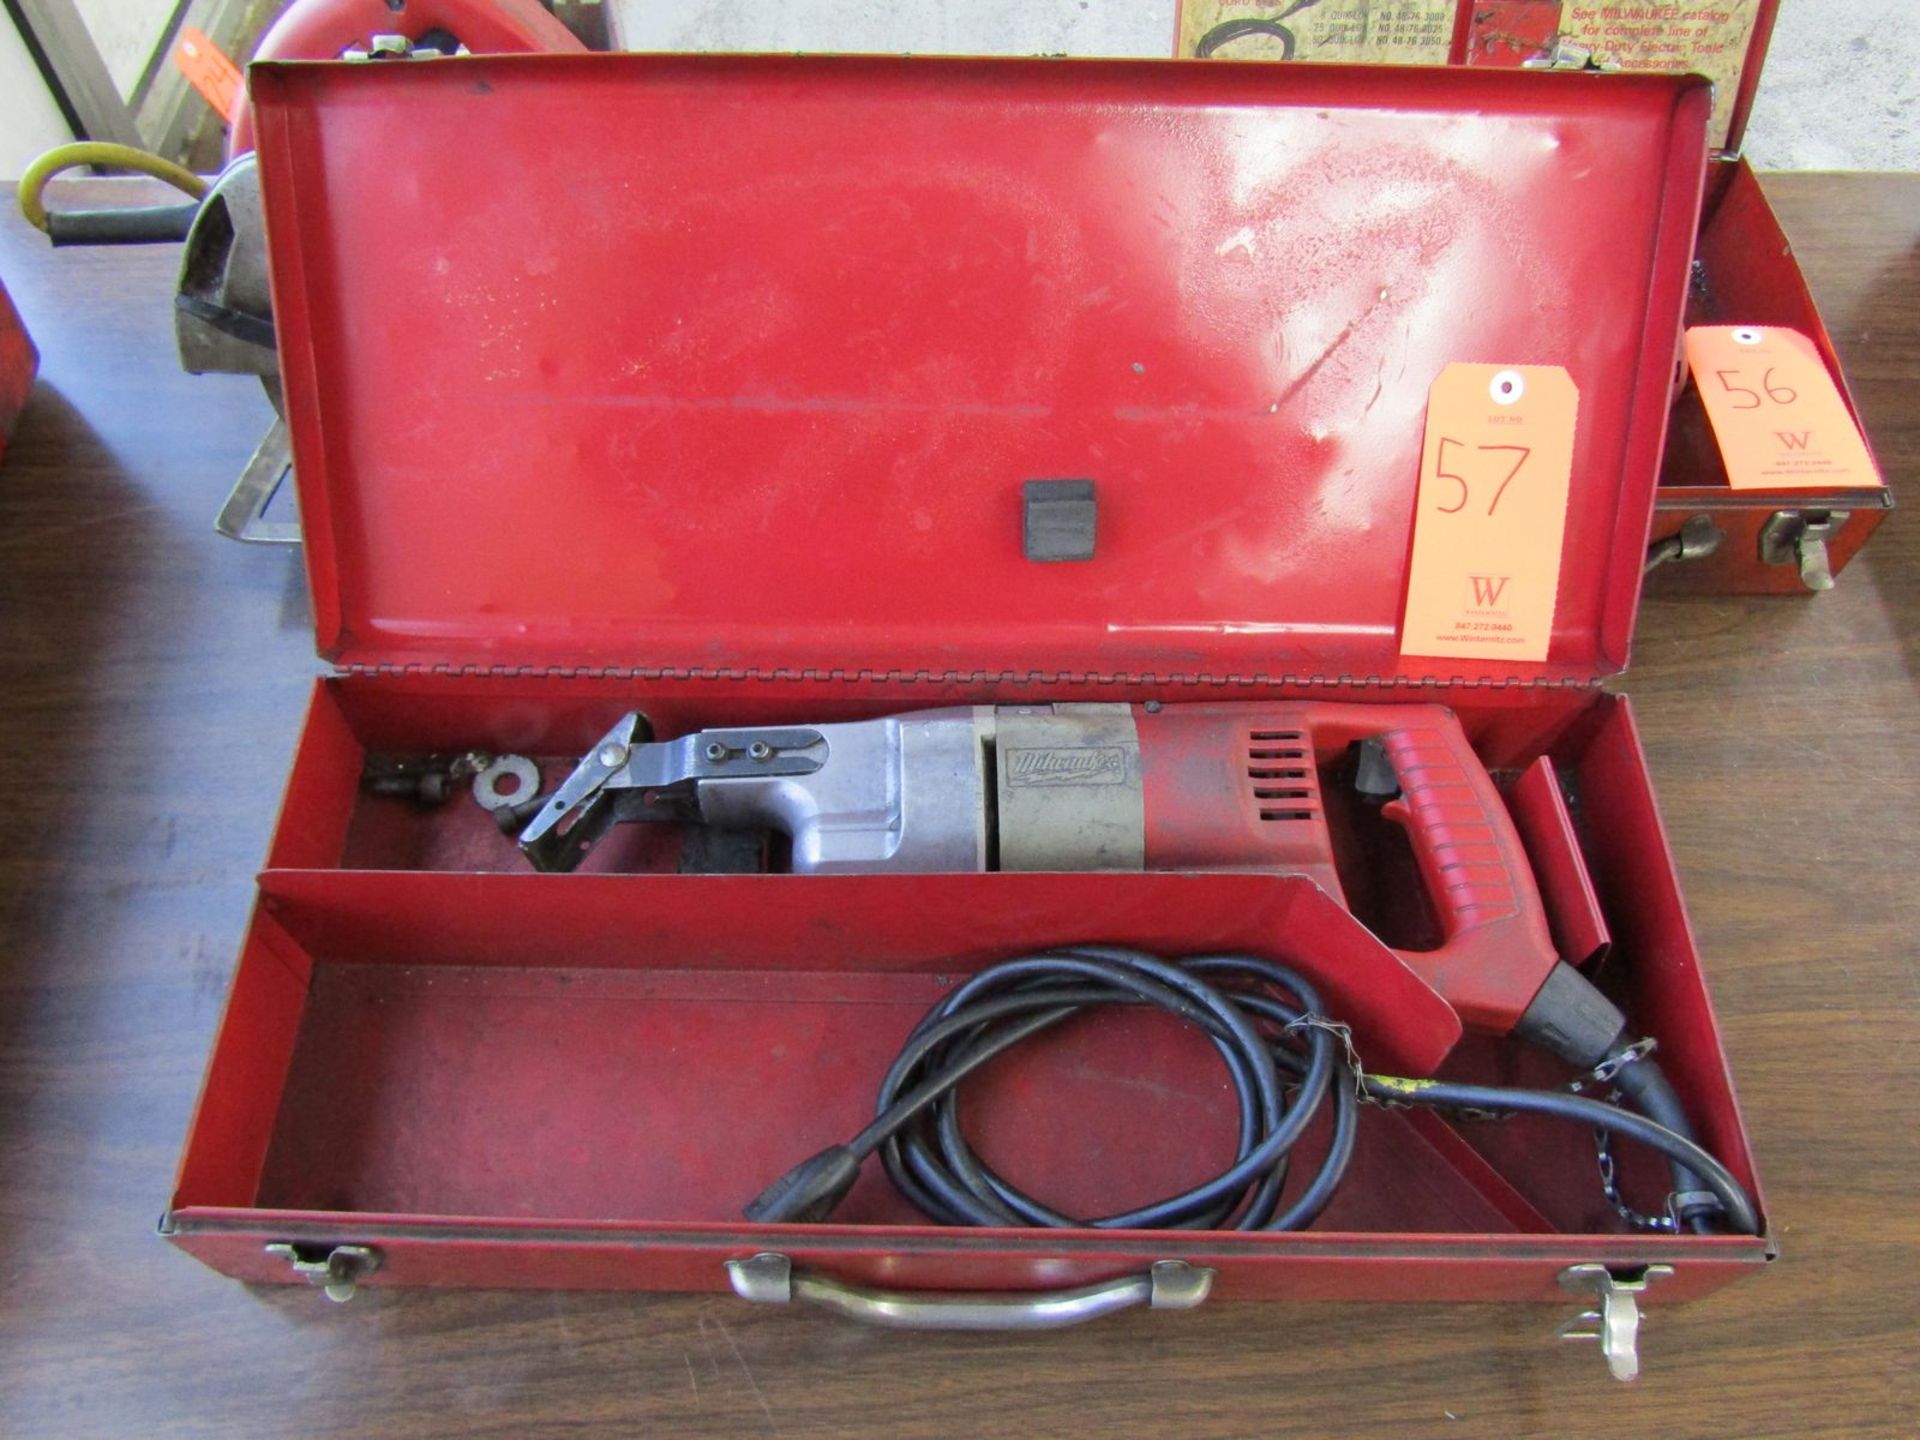 Milwaukee Model 6507 SawZall Electric Reciprocating Saw; 0 - 2,400 SPM, 1-Ph